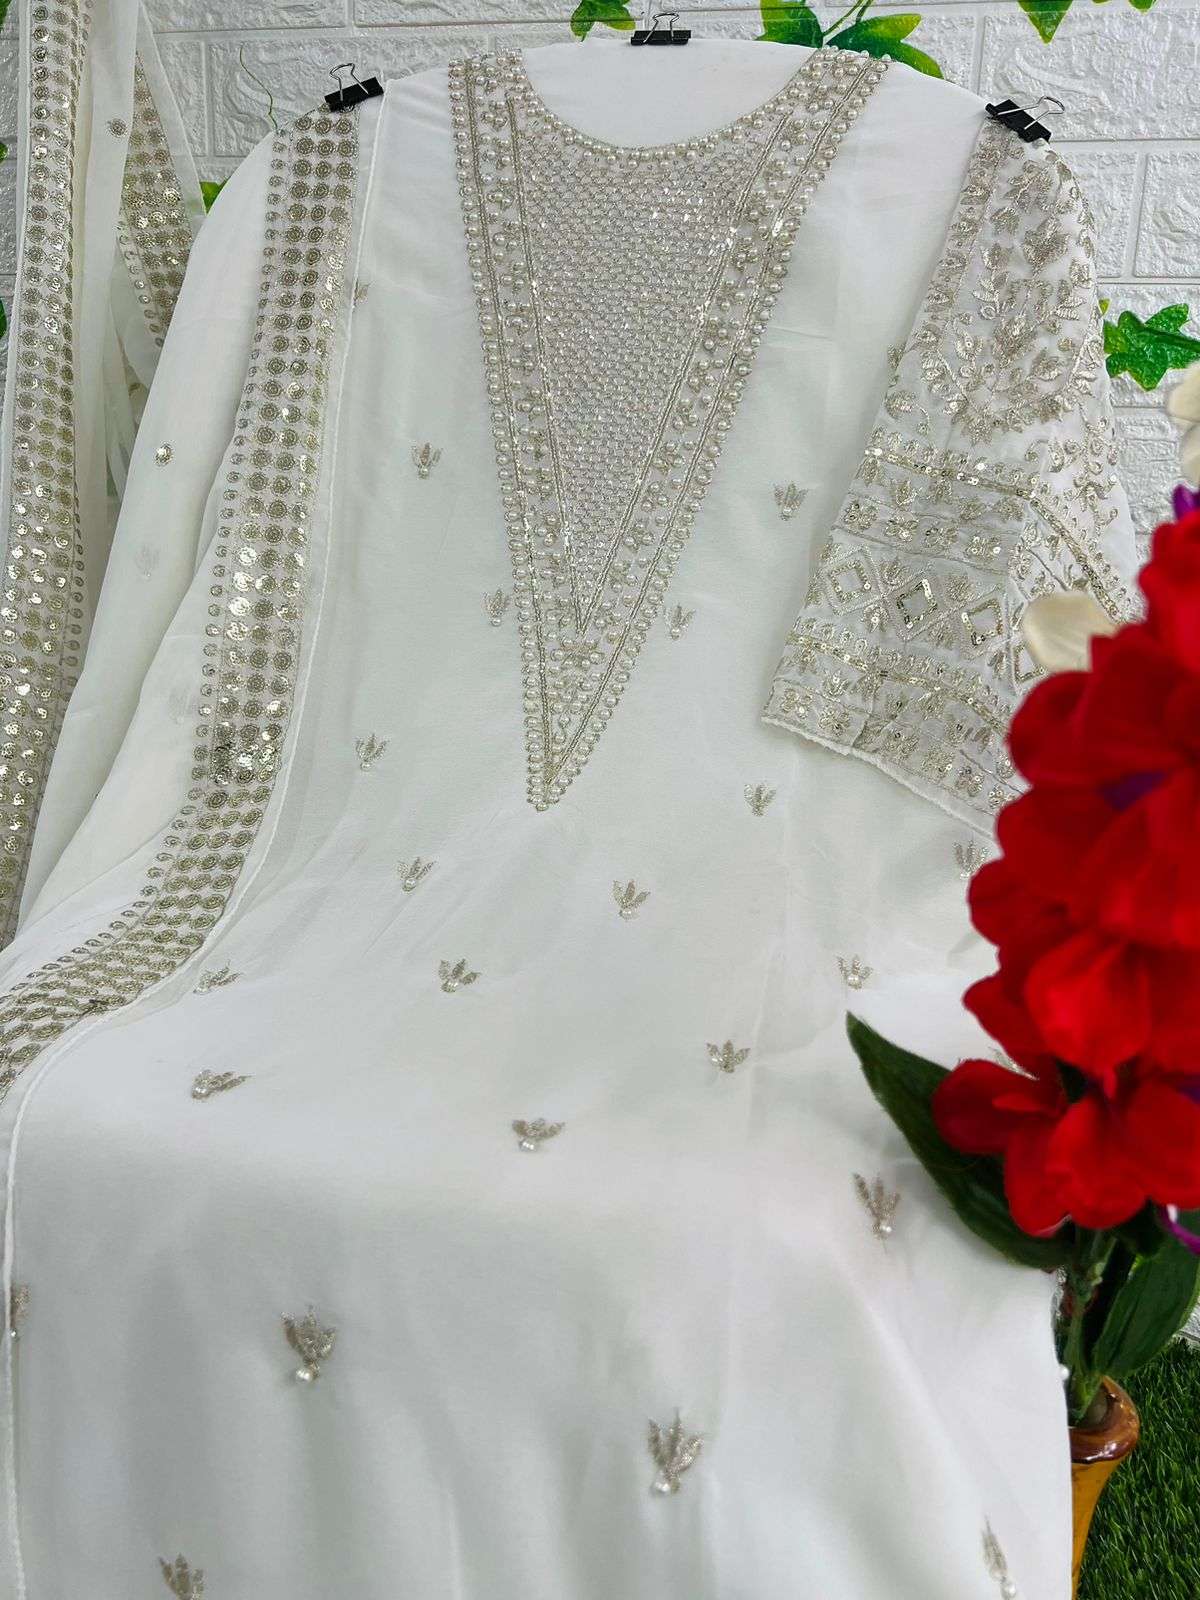 al khushbu fiza vol-1 4084 series exclusive designer pakistani salwar suits catalogue design 2023 